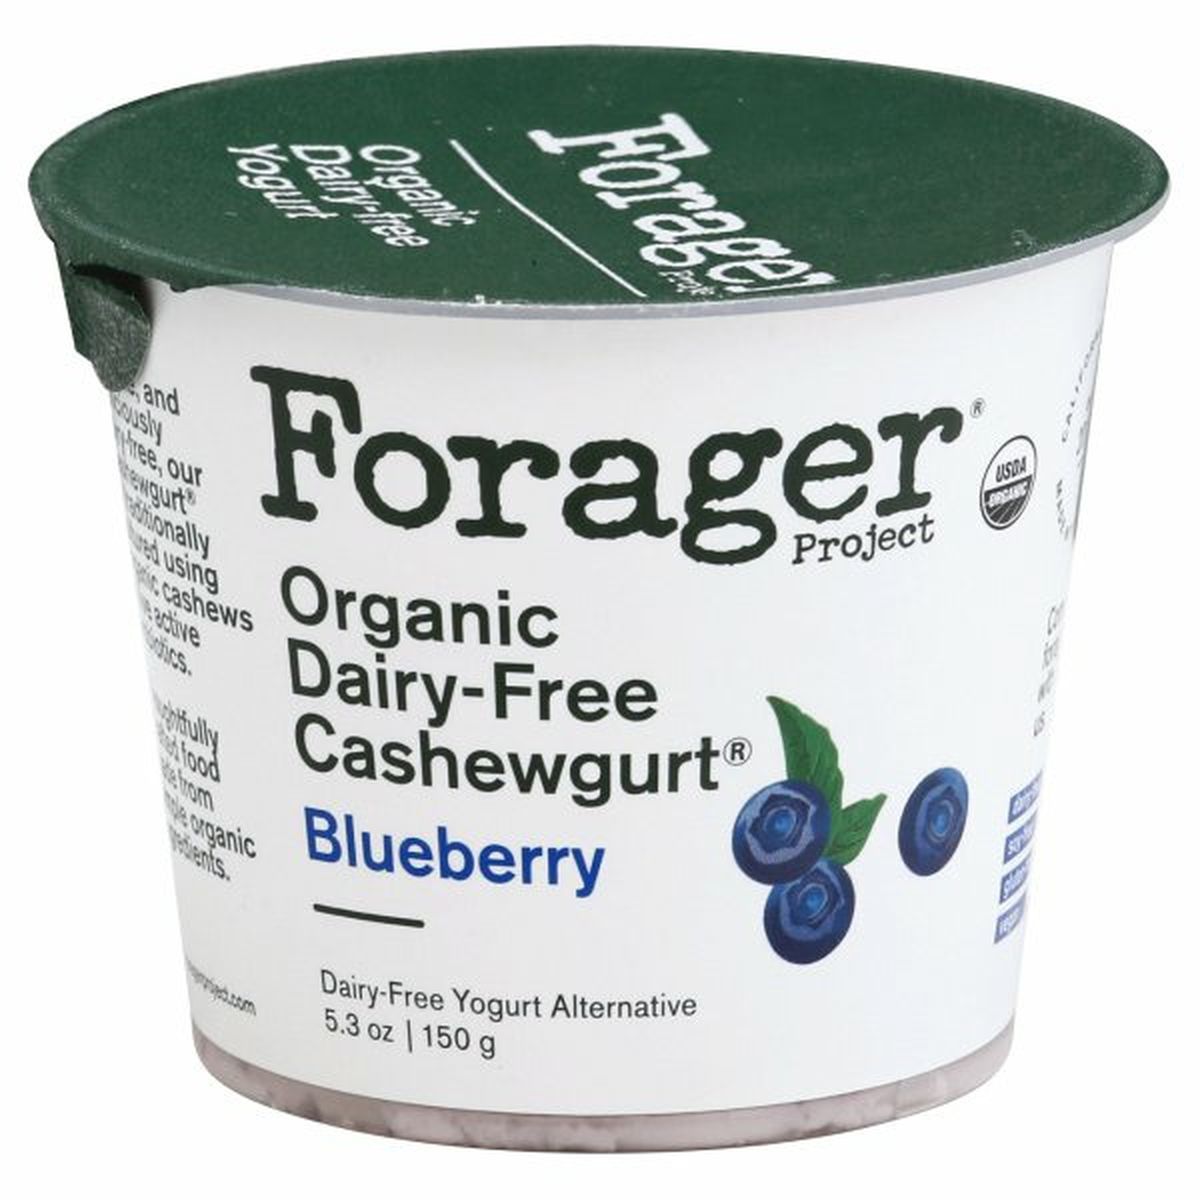 Calories in Forager Project Cashewmilk Yogurt, Organic, Dairy-Free, Blueberry